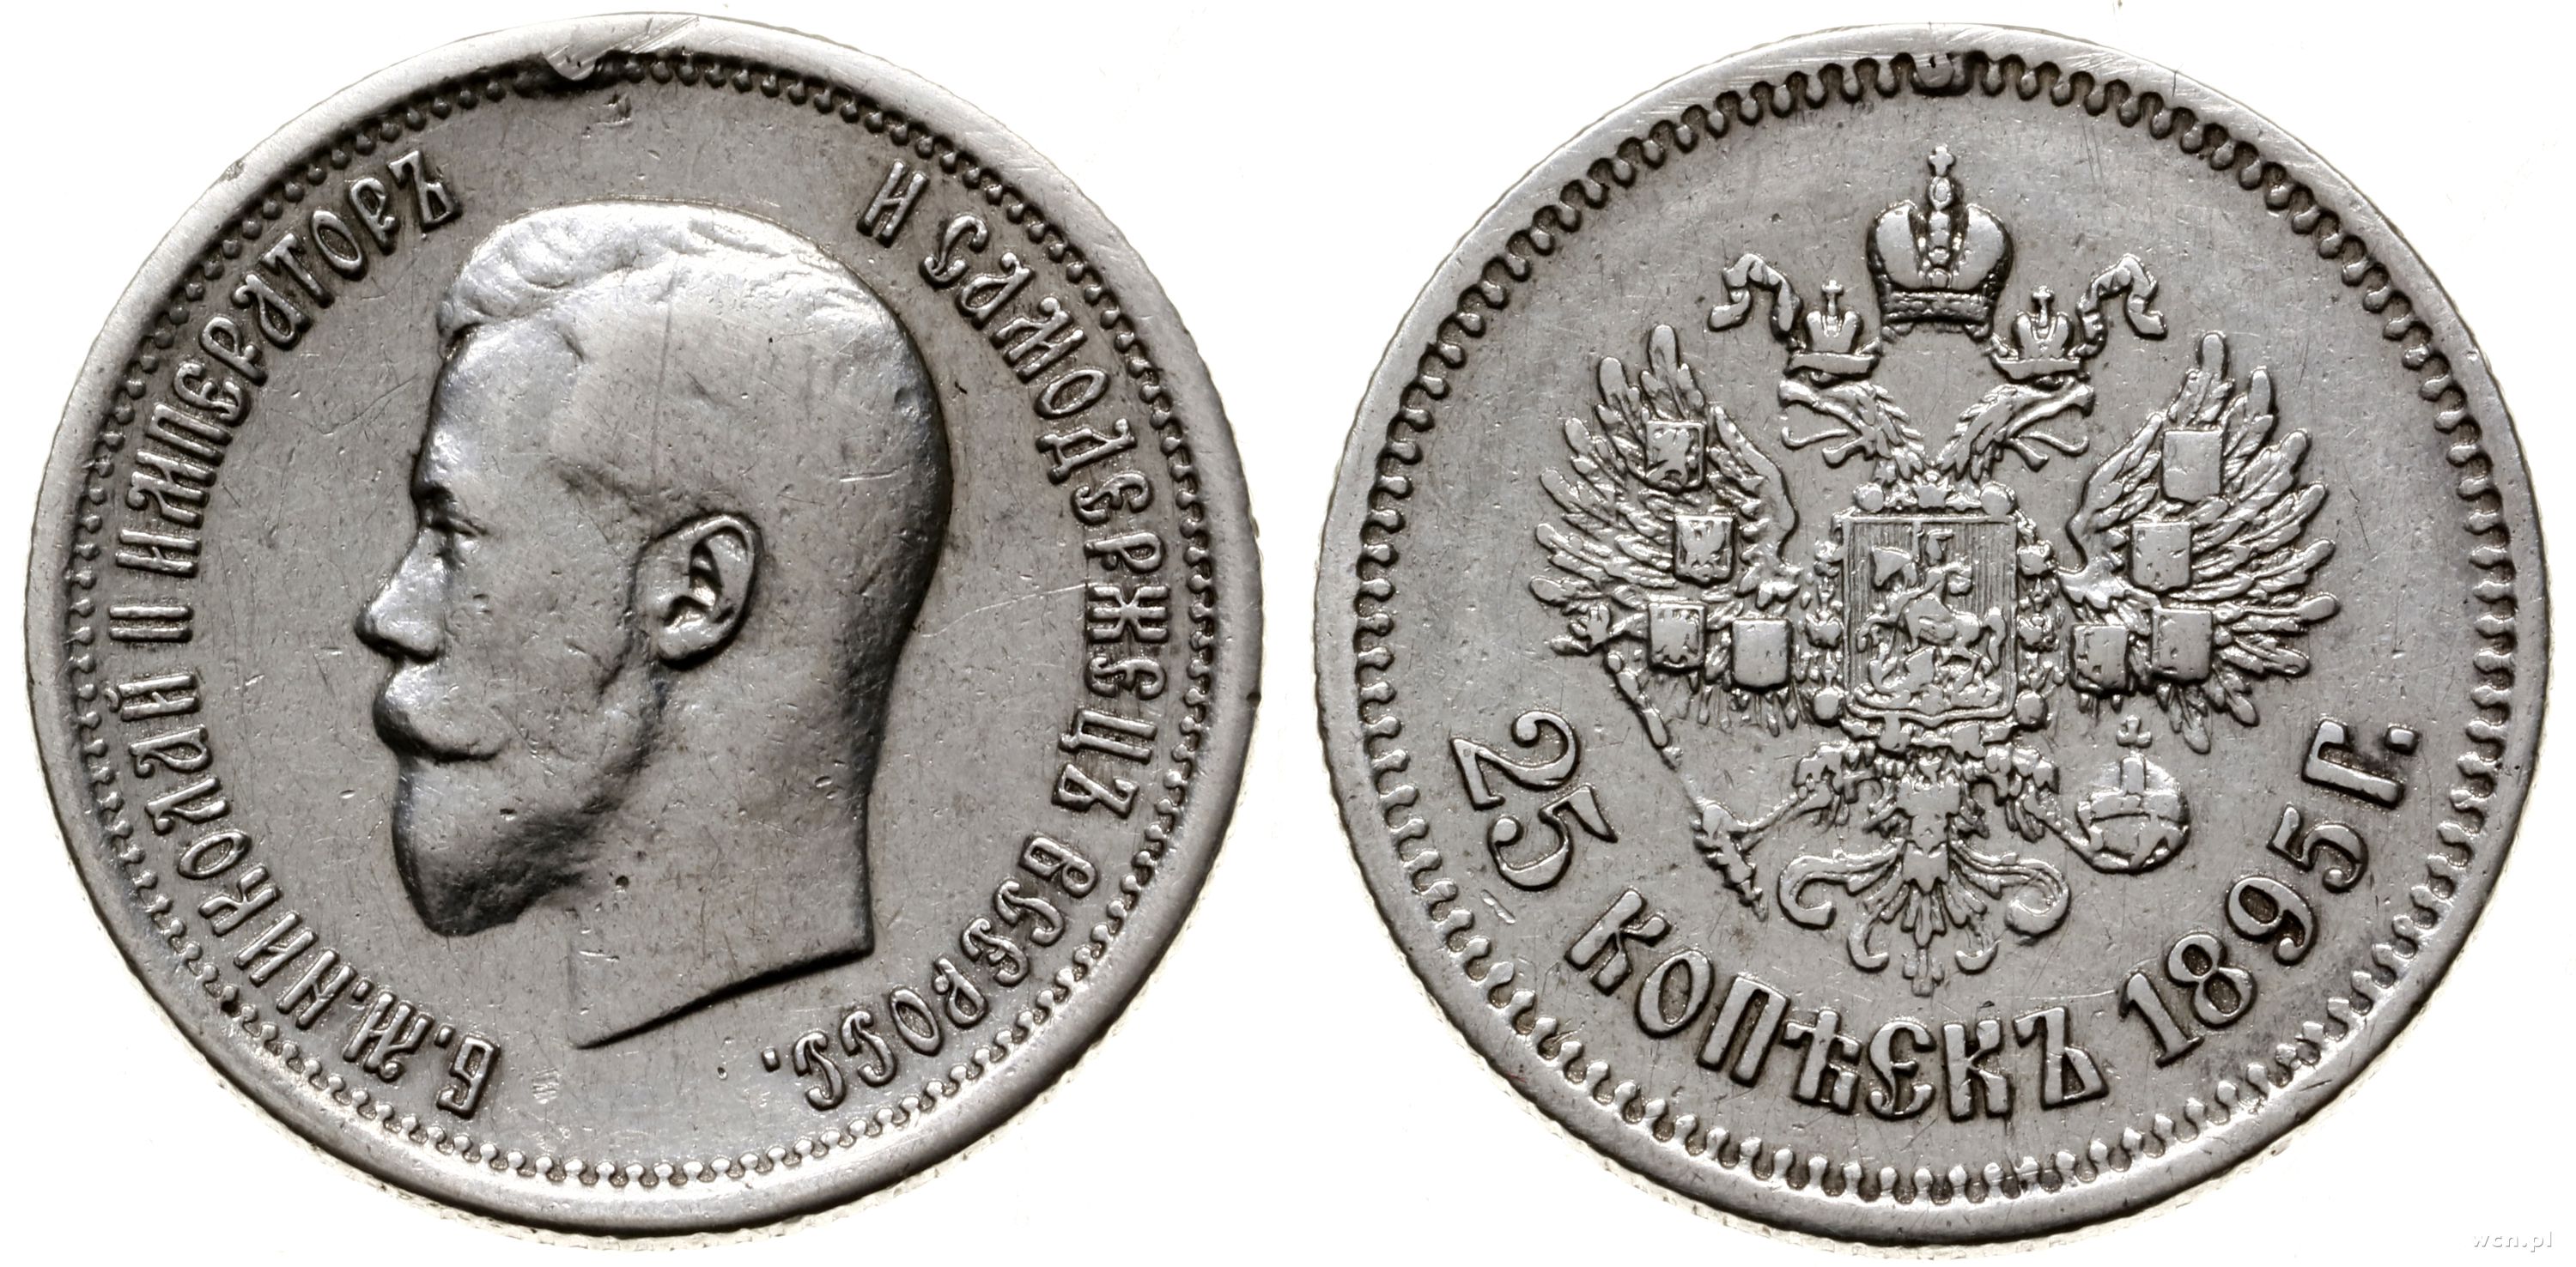 50 копеек монеты серебряные. 50 Копеек 1897 *. Царский рубль серебряный 1899 года. Монета 50 копеек 1897 года.